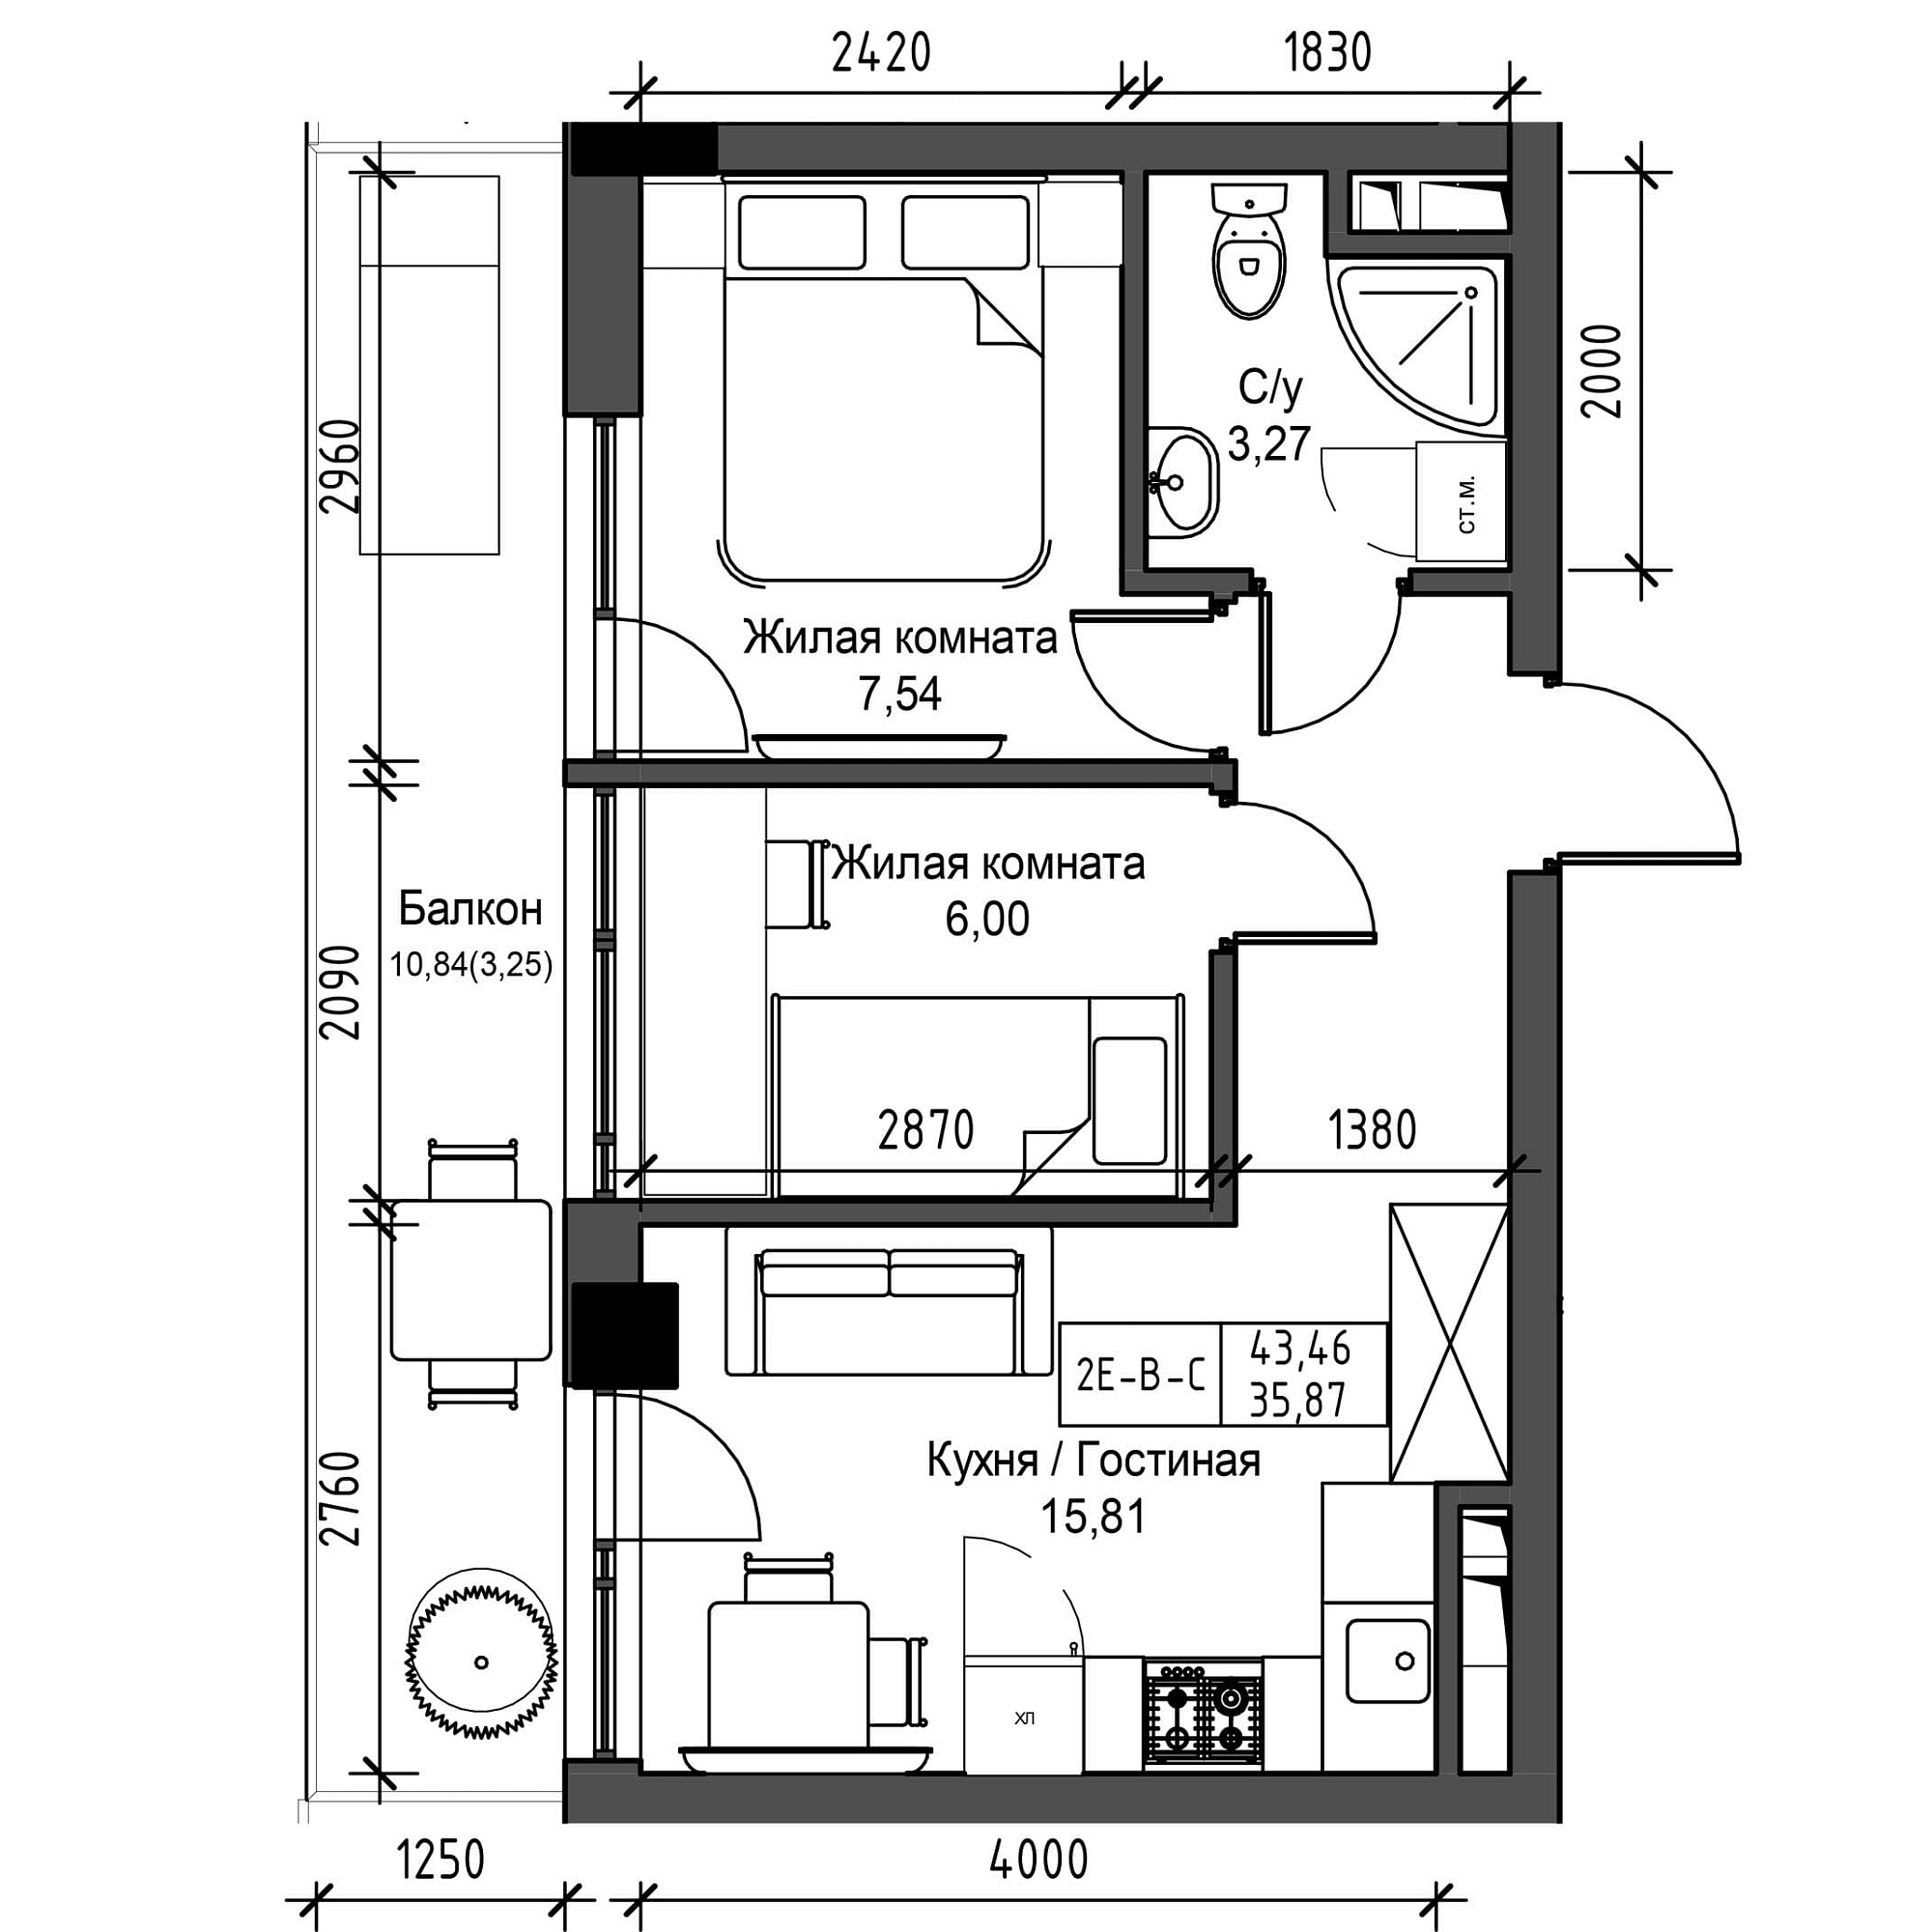 Планування 2-к квартира площею 35.87м2, UM-001-09/0012.